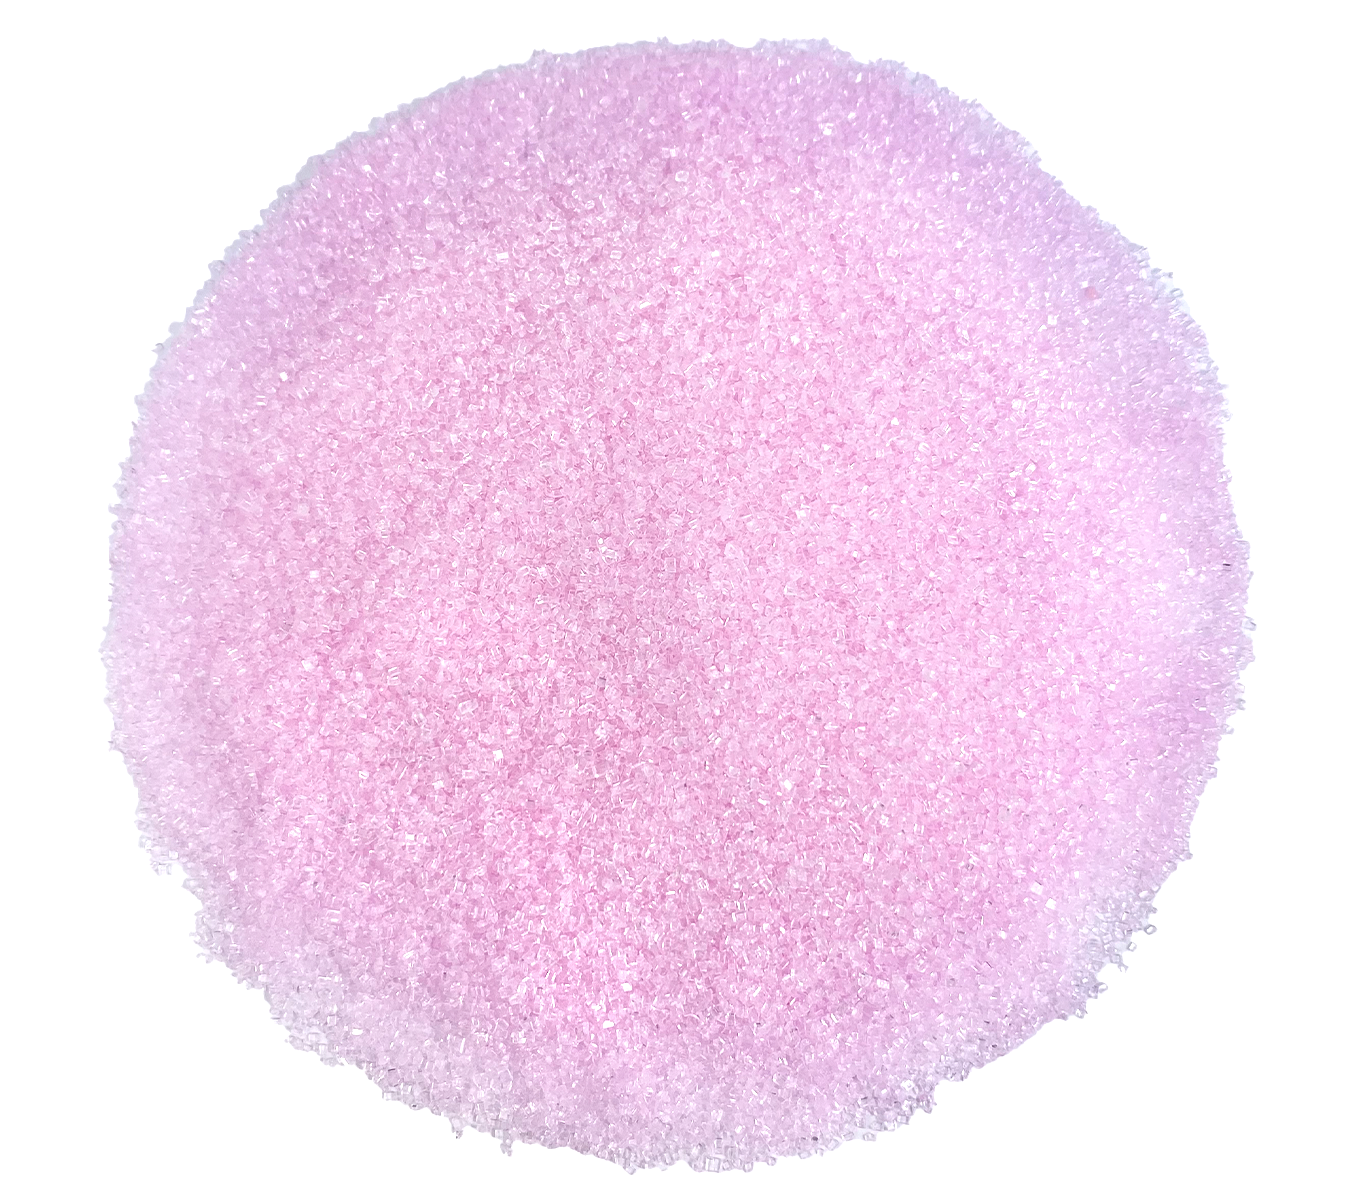 Load image into Gallery viewer, Rose Quartz - Pink Sanding Sugar 4oz
